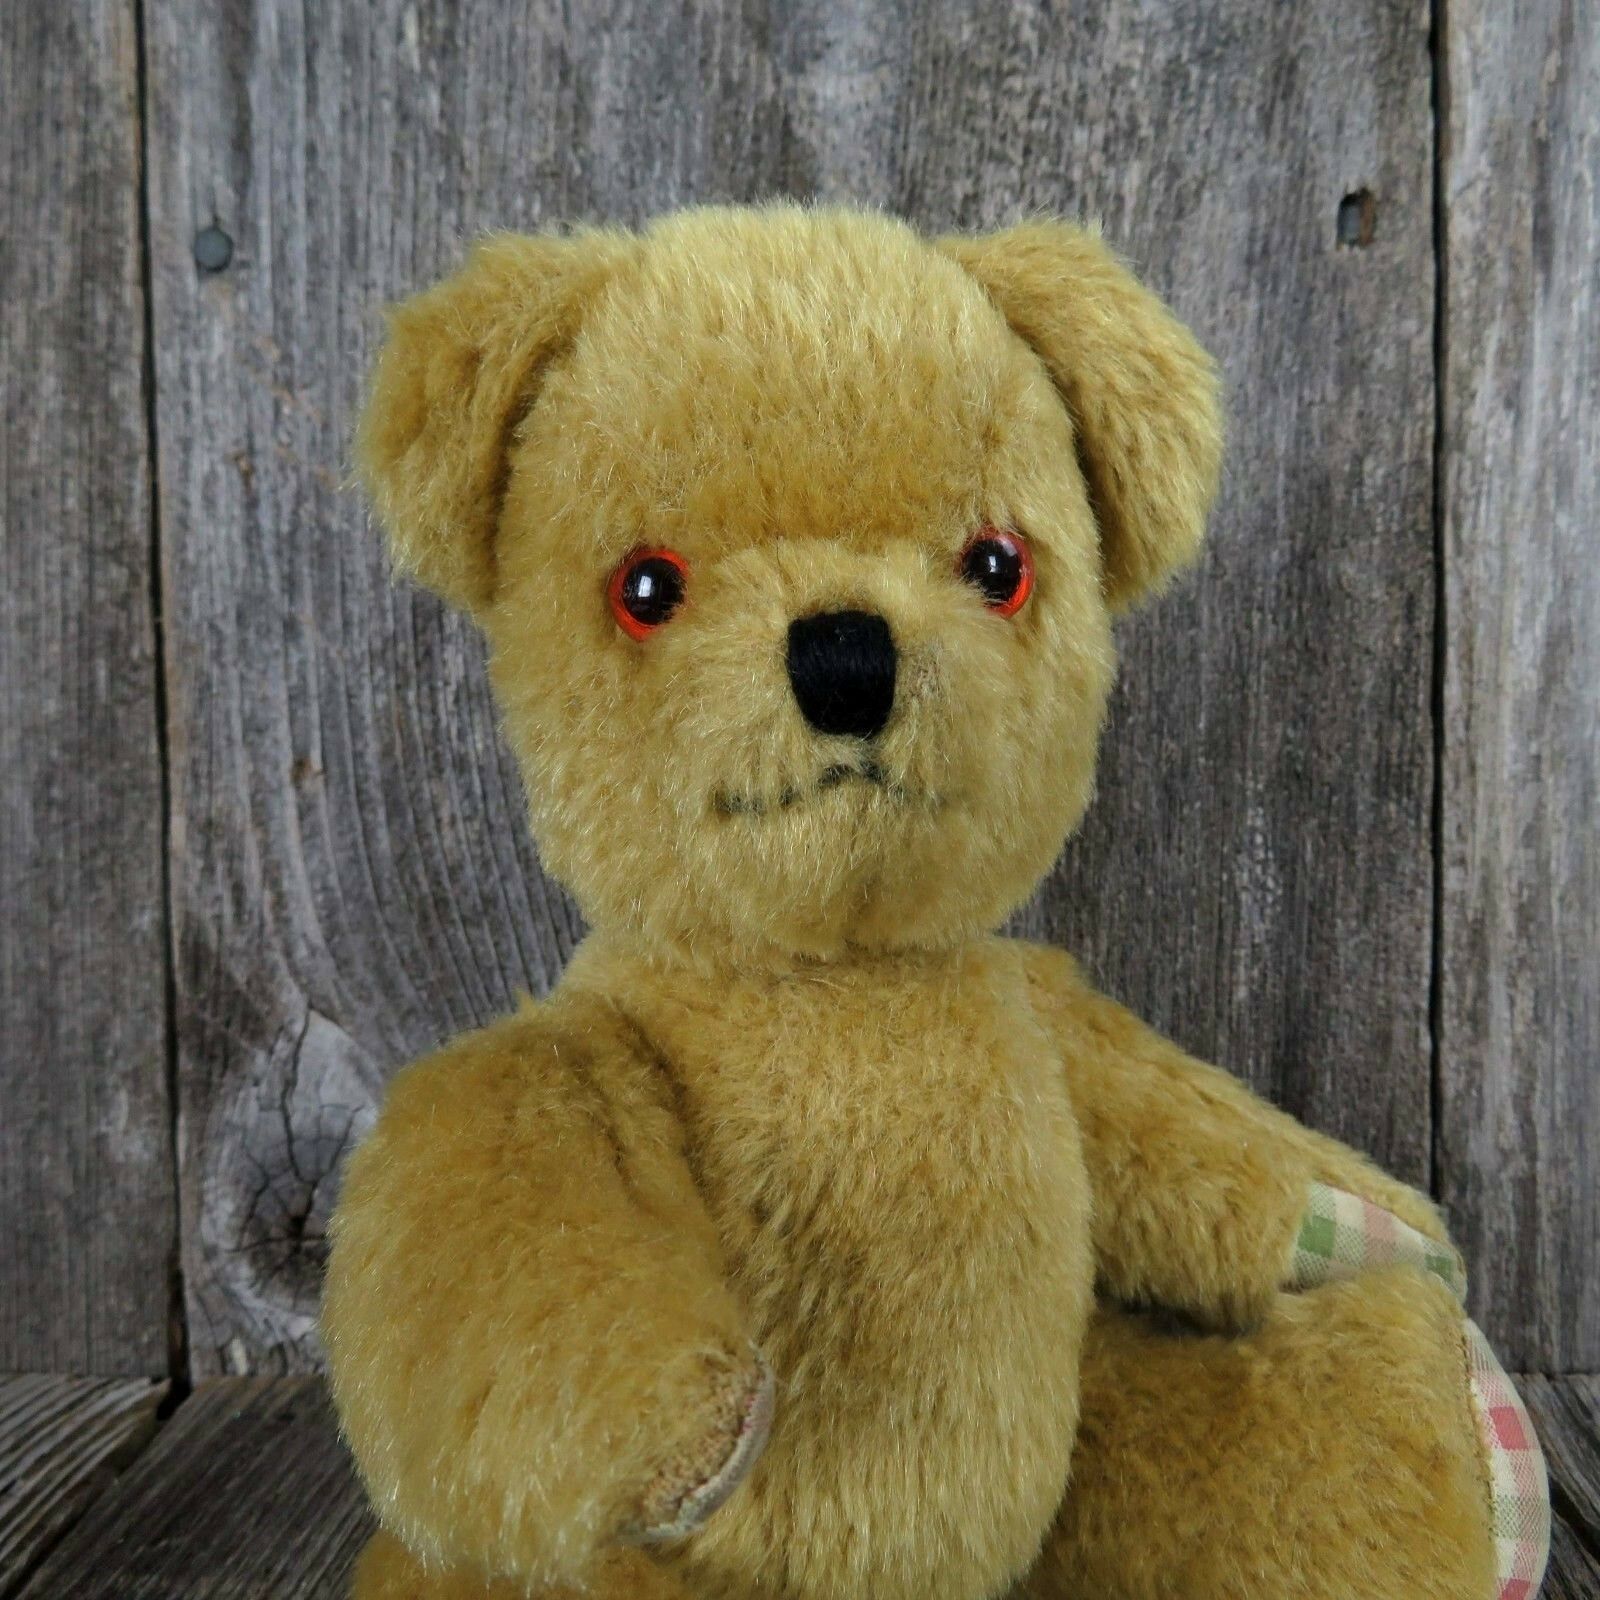 Vintage Mohair Teddy Bear Jointed Plush Stuffed Animal Laura Ashley Gingham Glass Eyes - At Grandma's Table